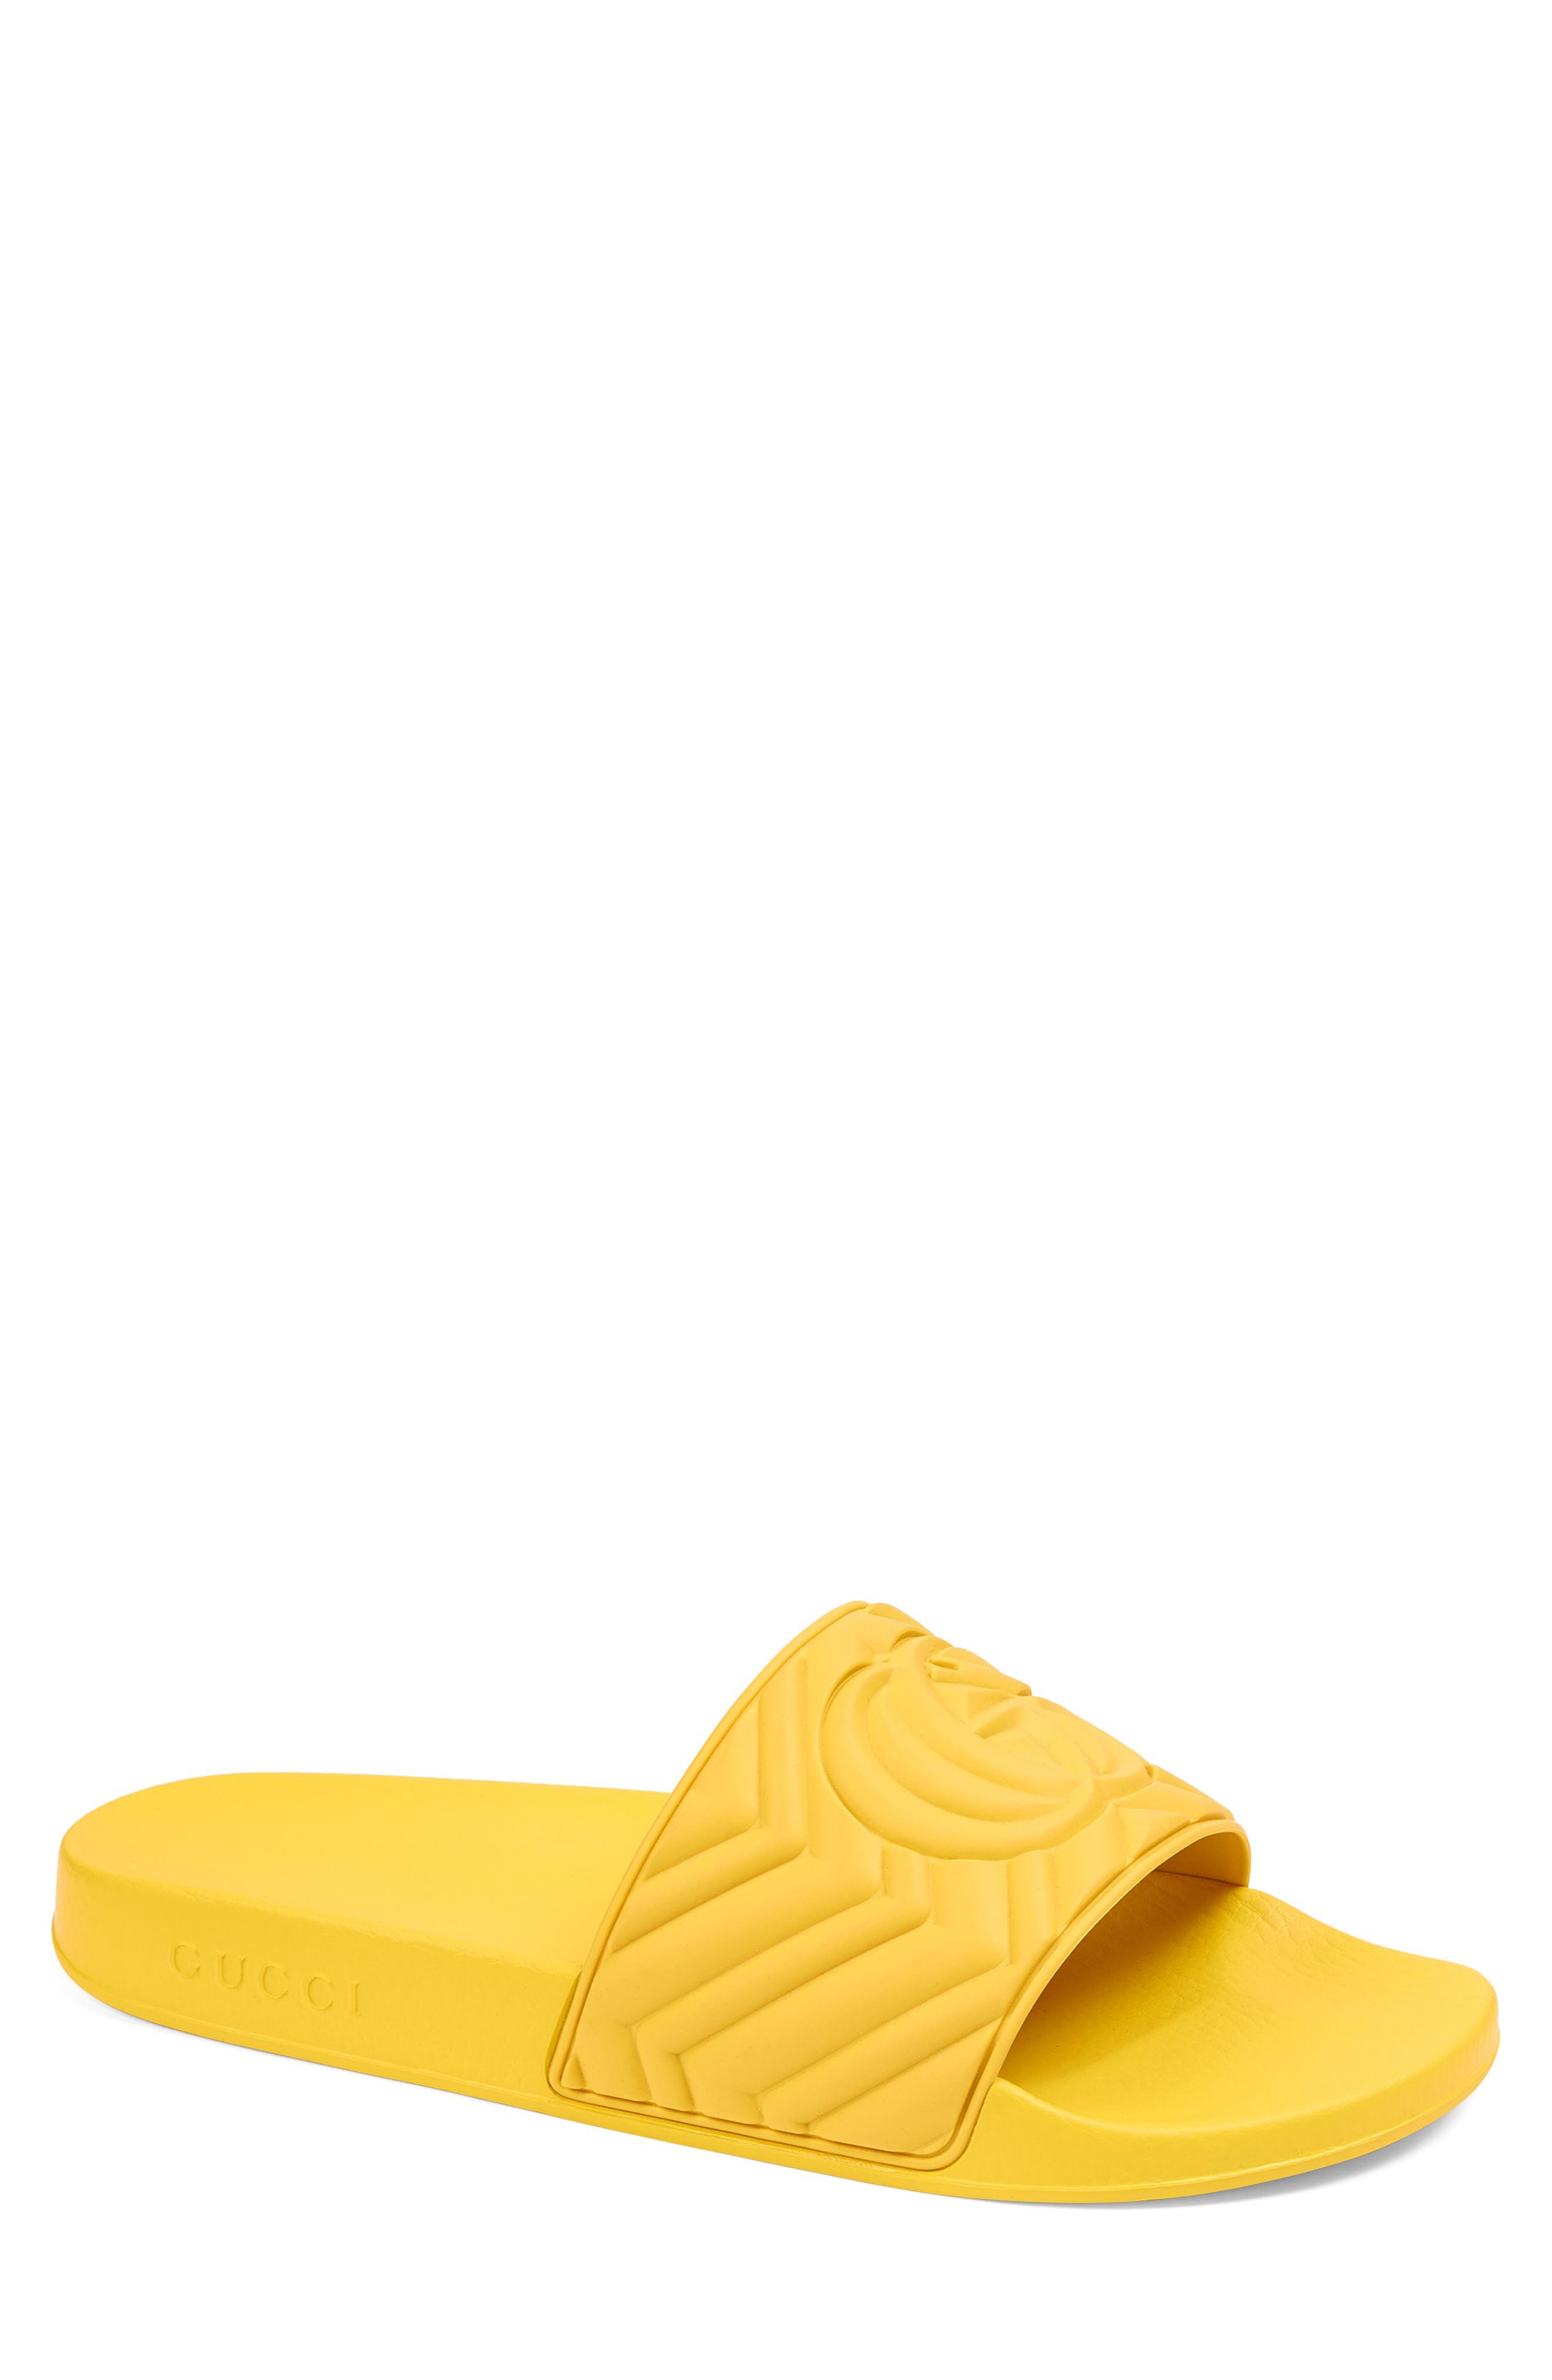 gucci slides yellow